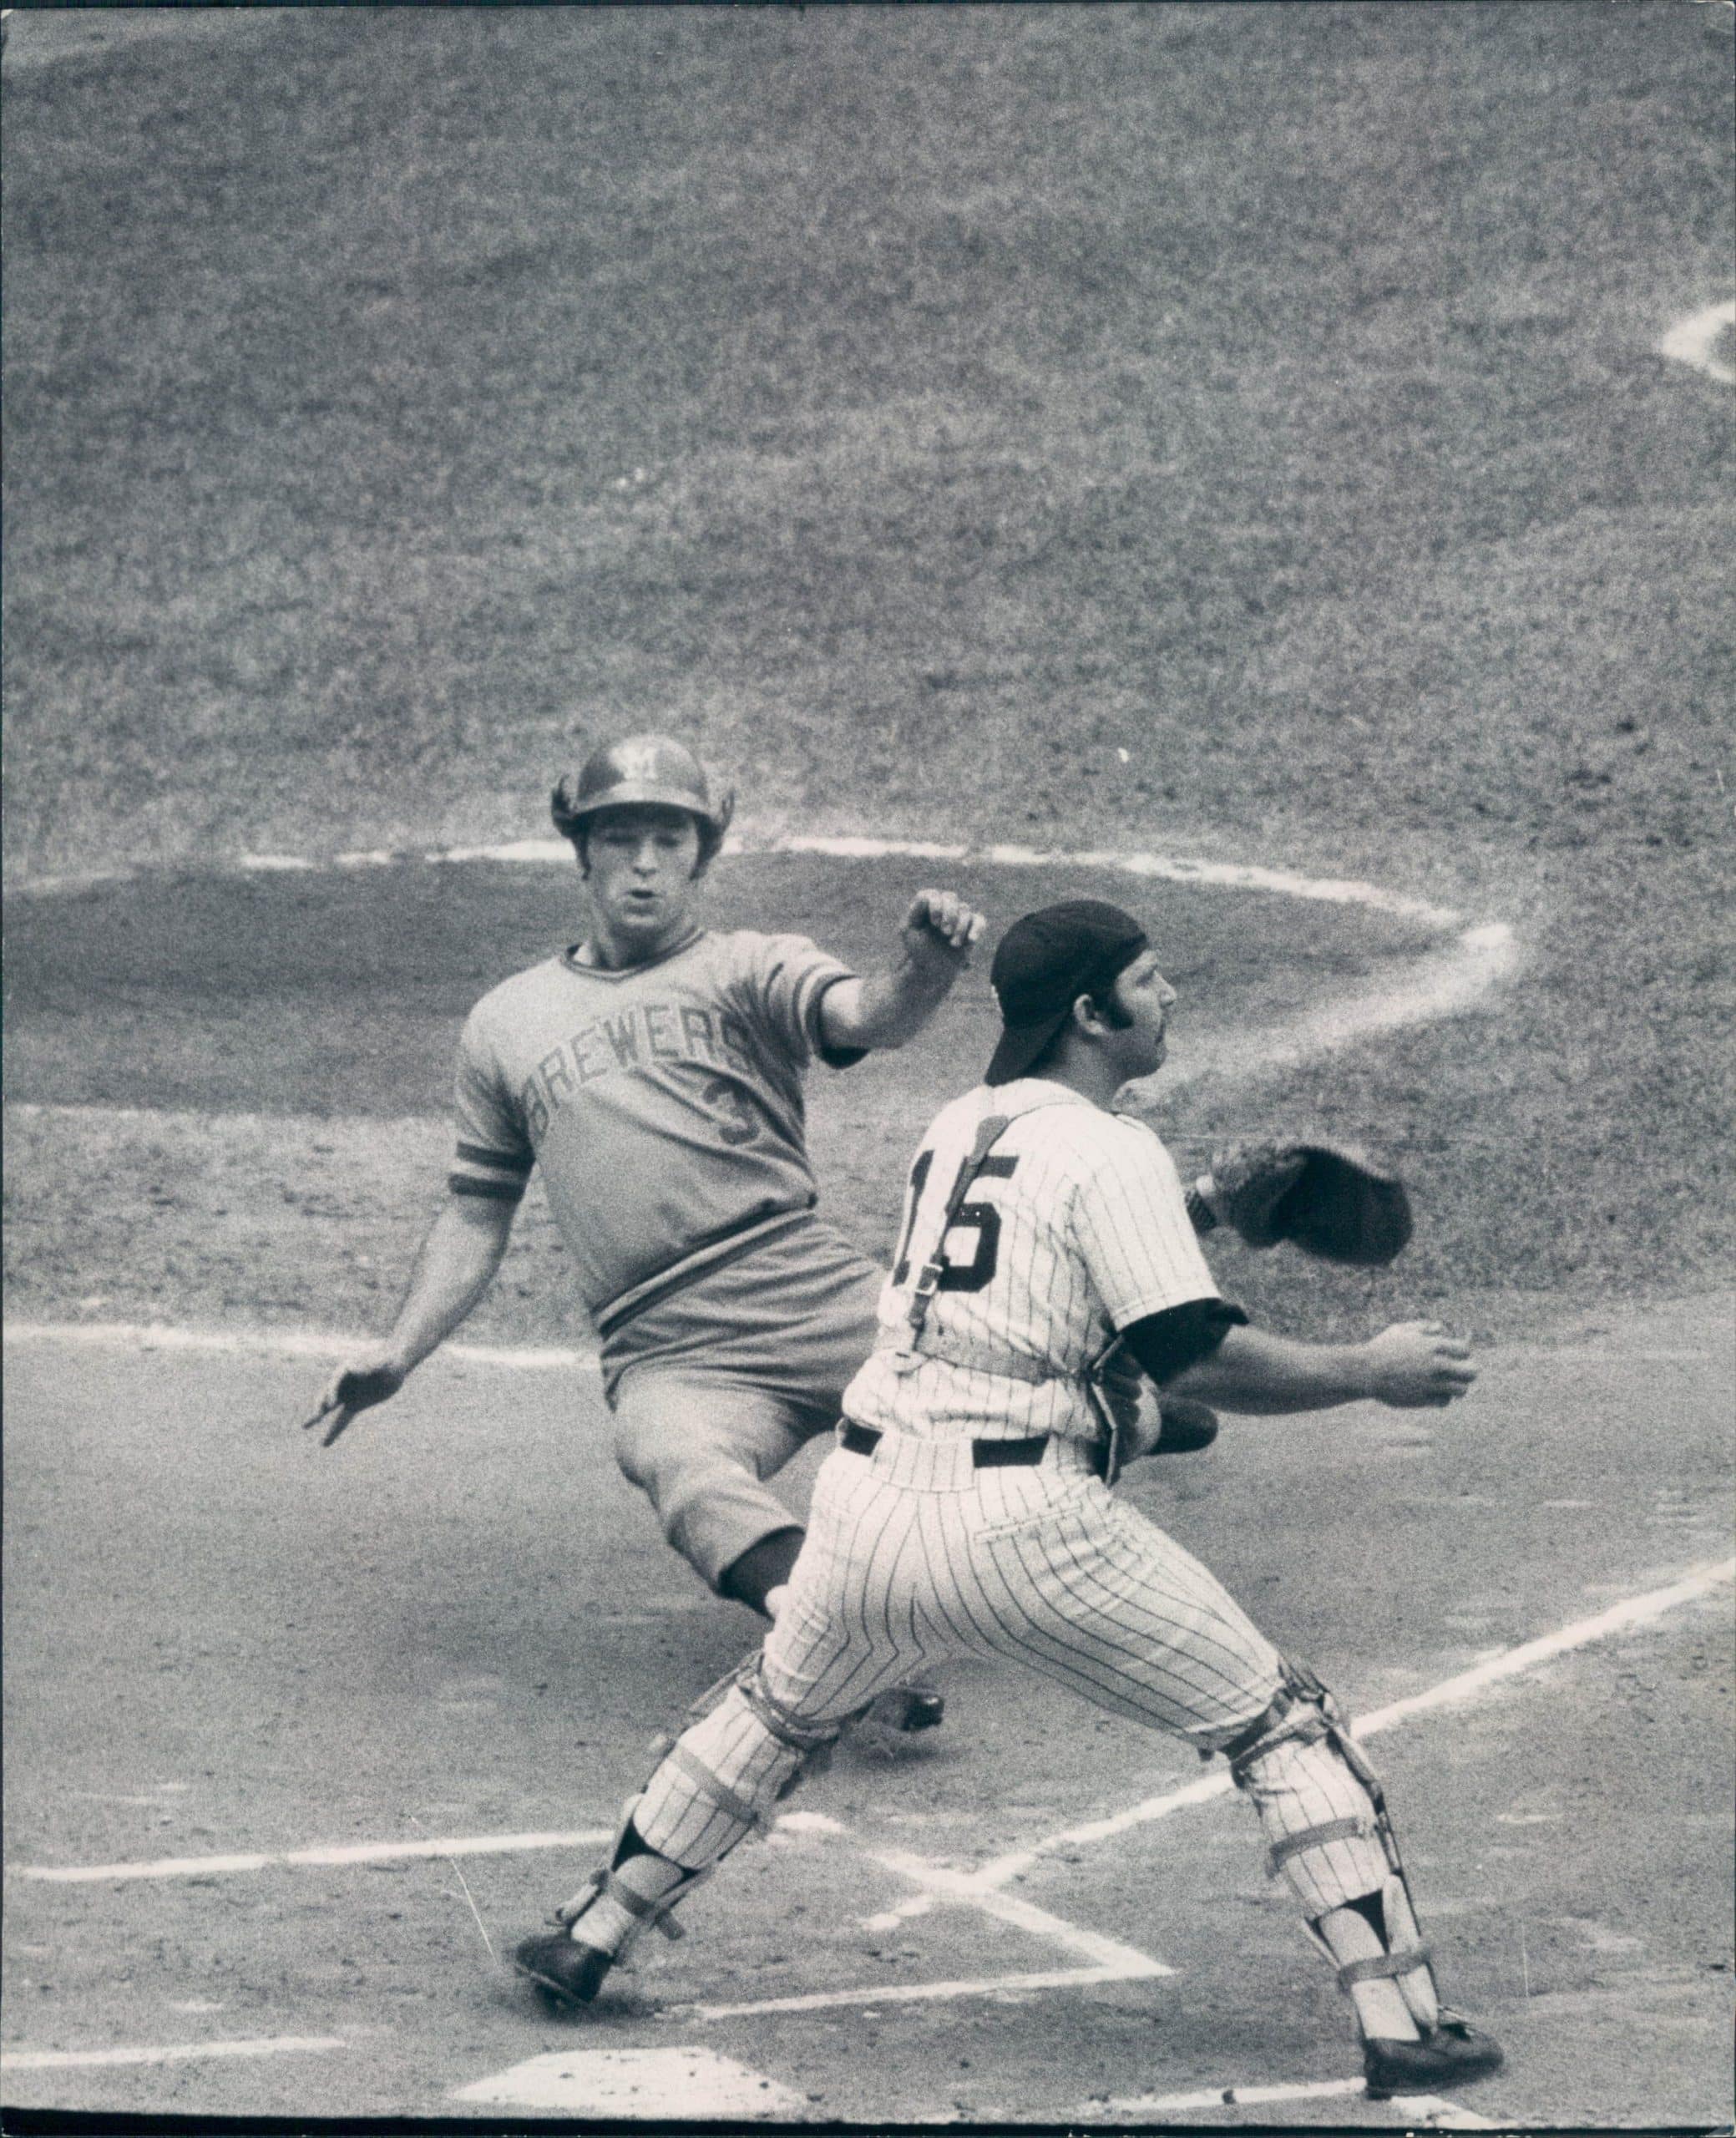 thurman munson catching in 1973